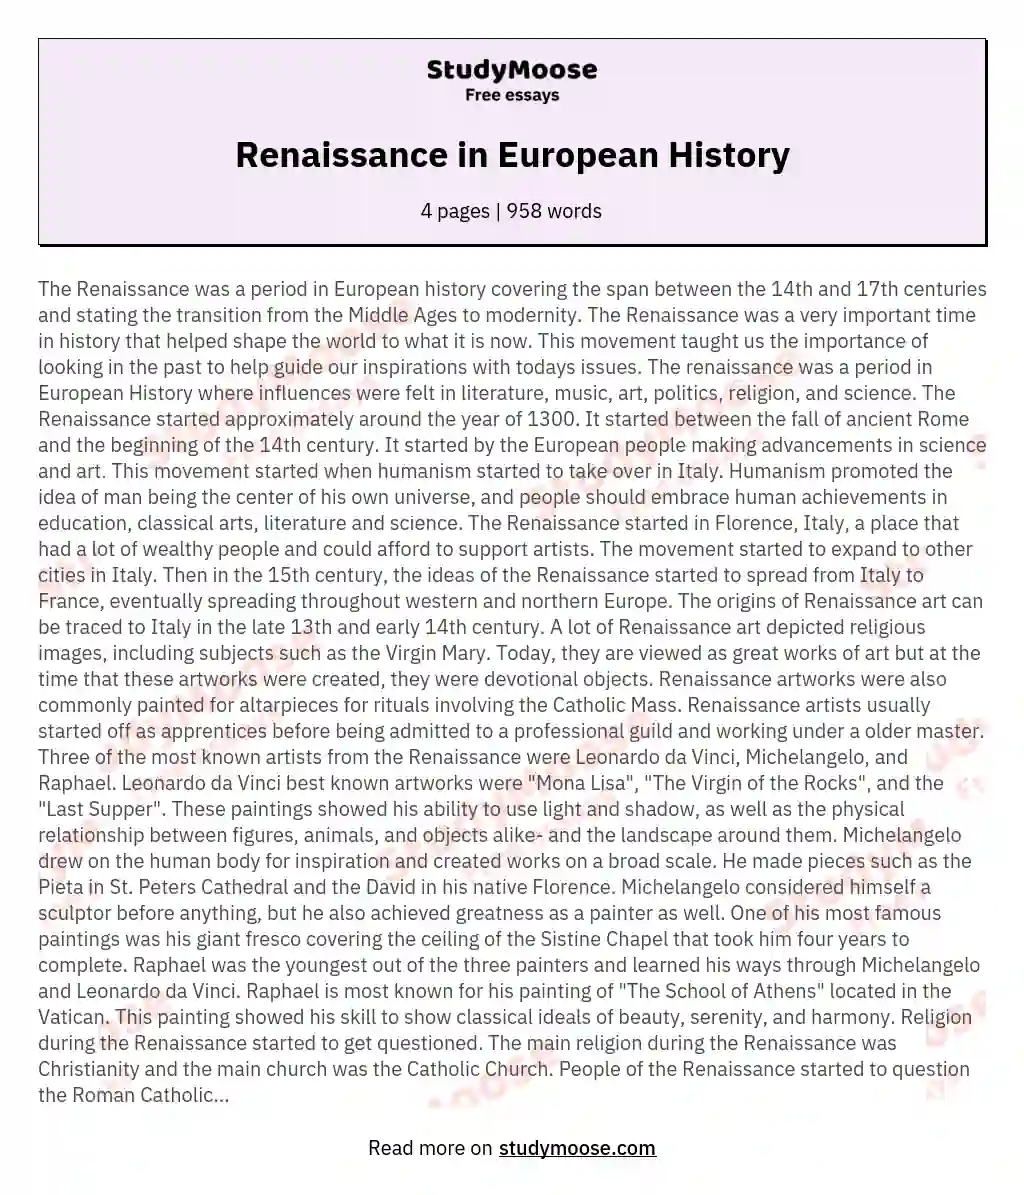 Renaissance in European History essay